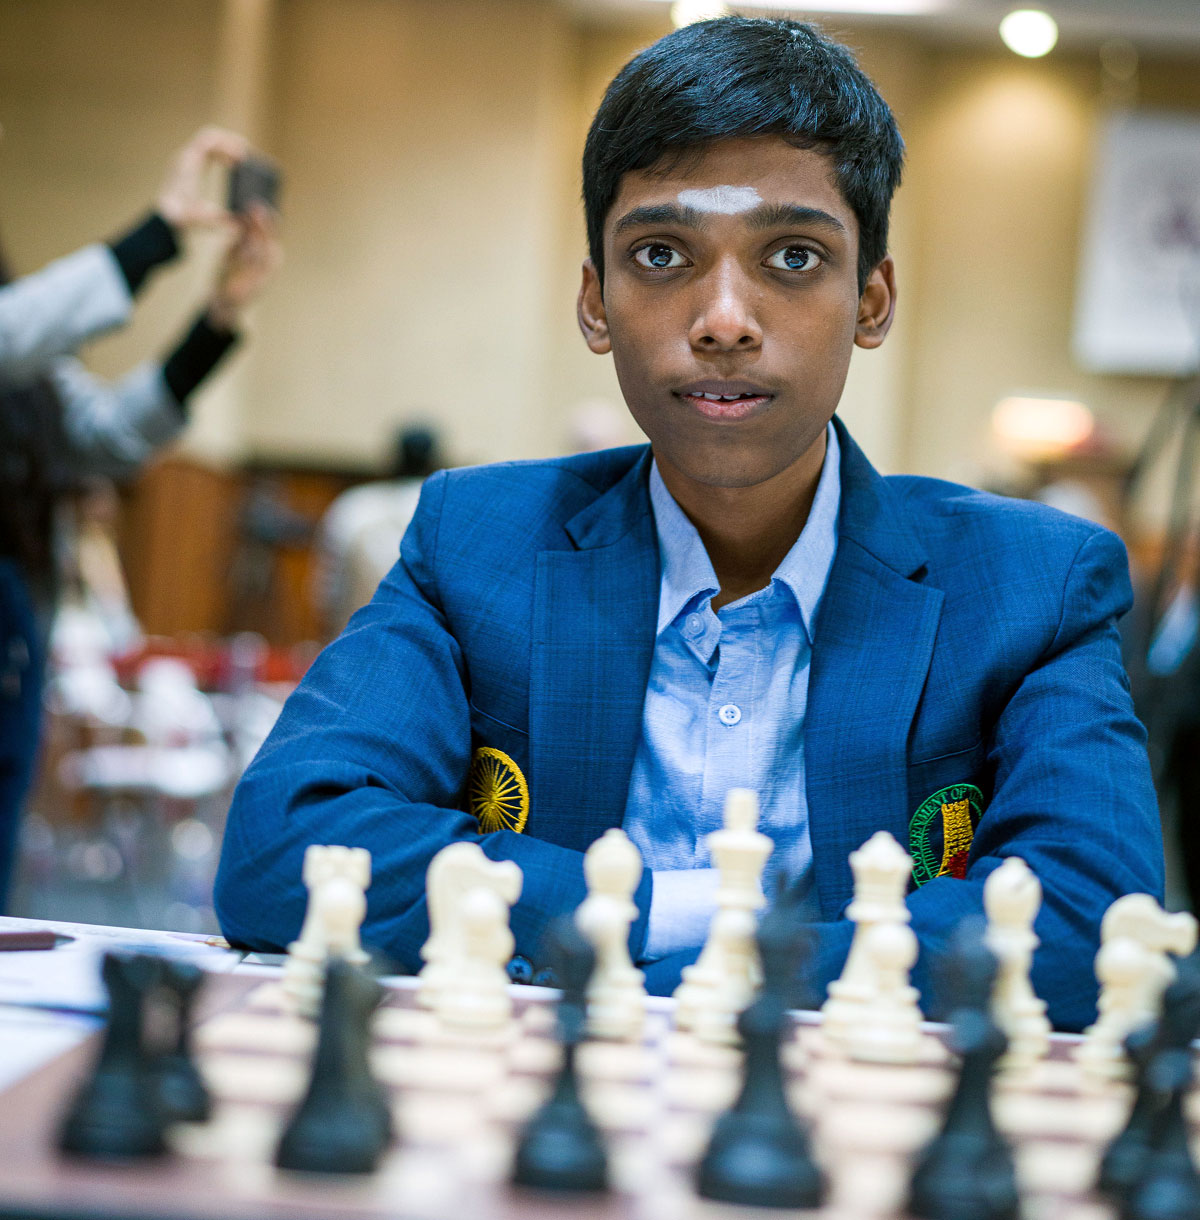 Praggnanandhaa beats Firouzja in FTX Crypto Cup chess